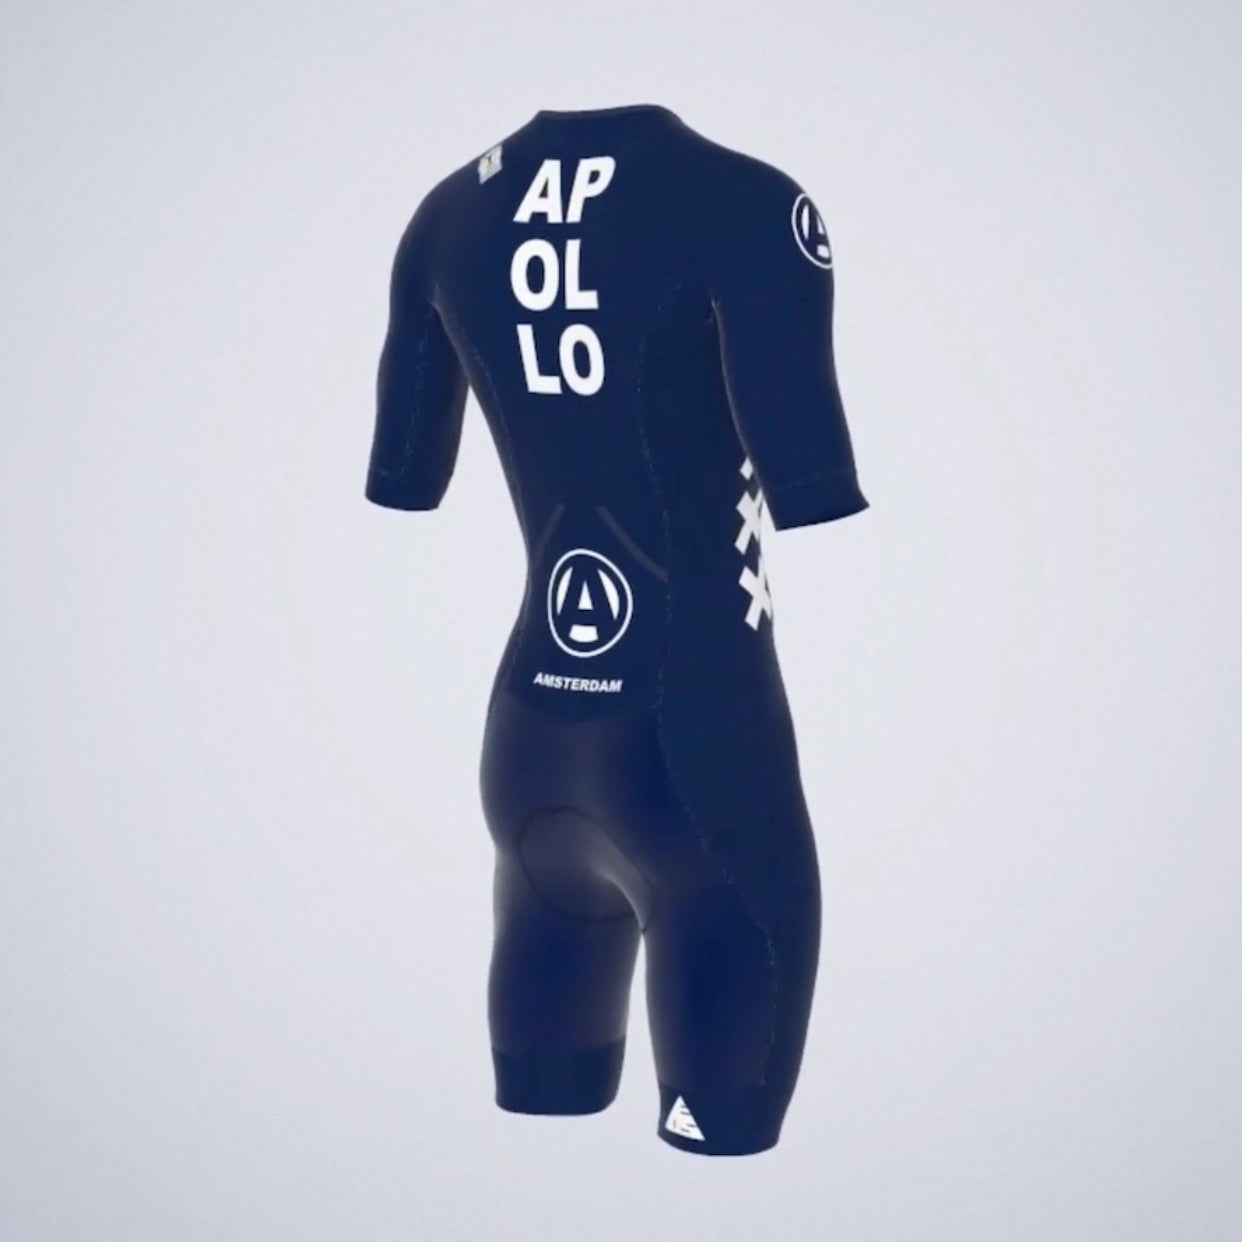 Apollo x Bioracer 2021 Season Triathlon Suit